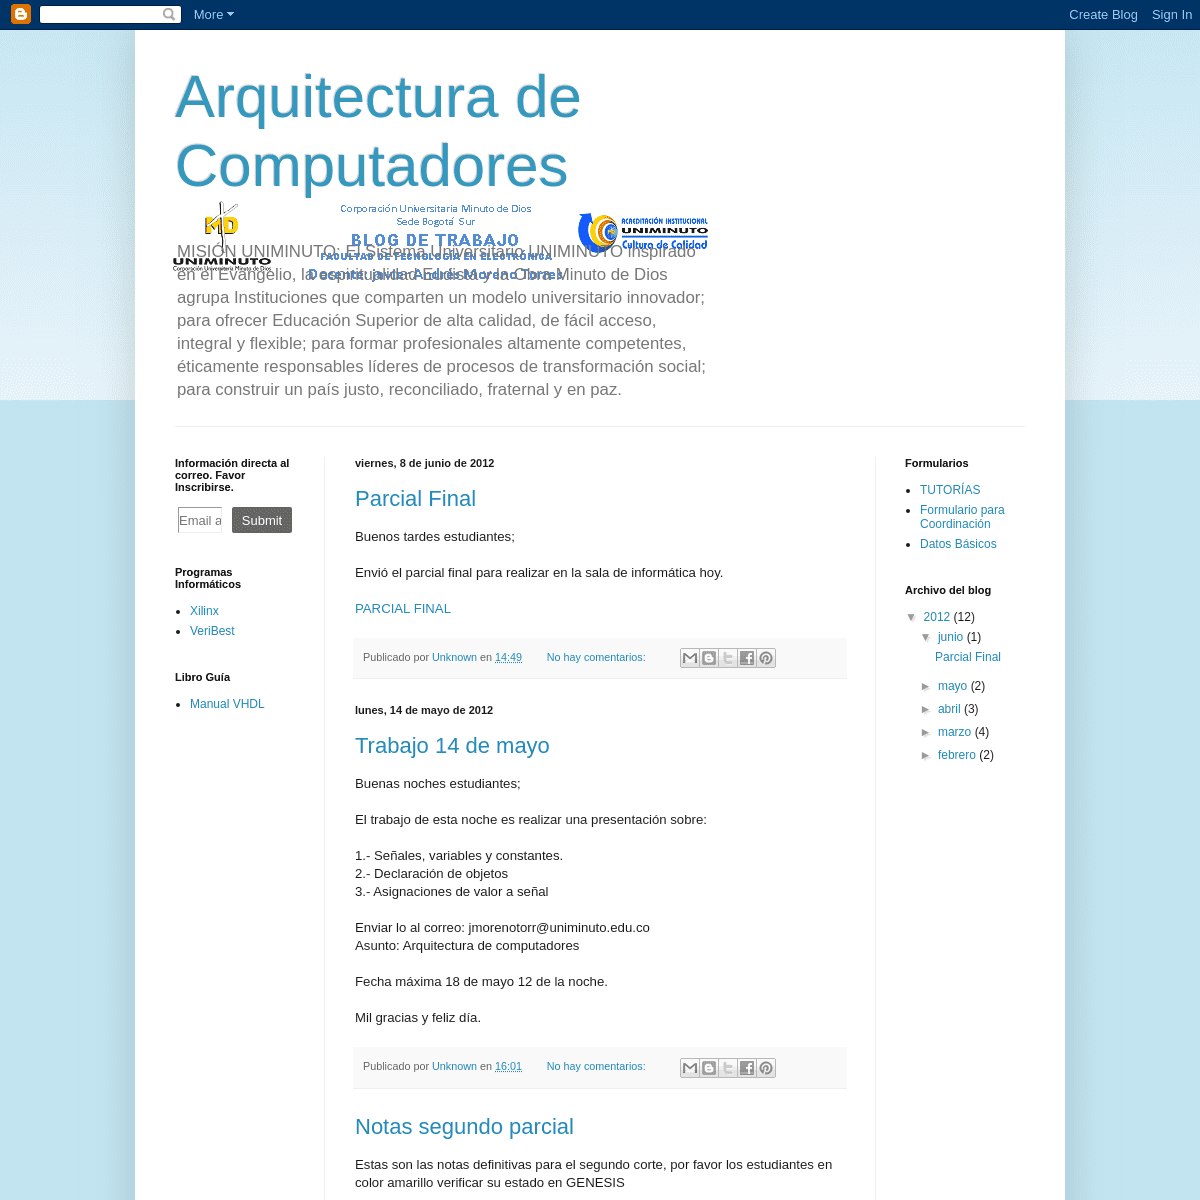 A complete backup of javierandres-arquitectura.blogspot.com